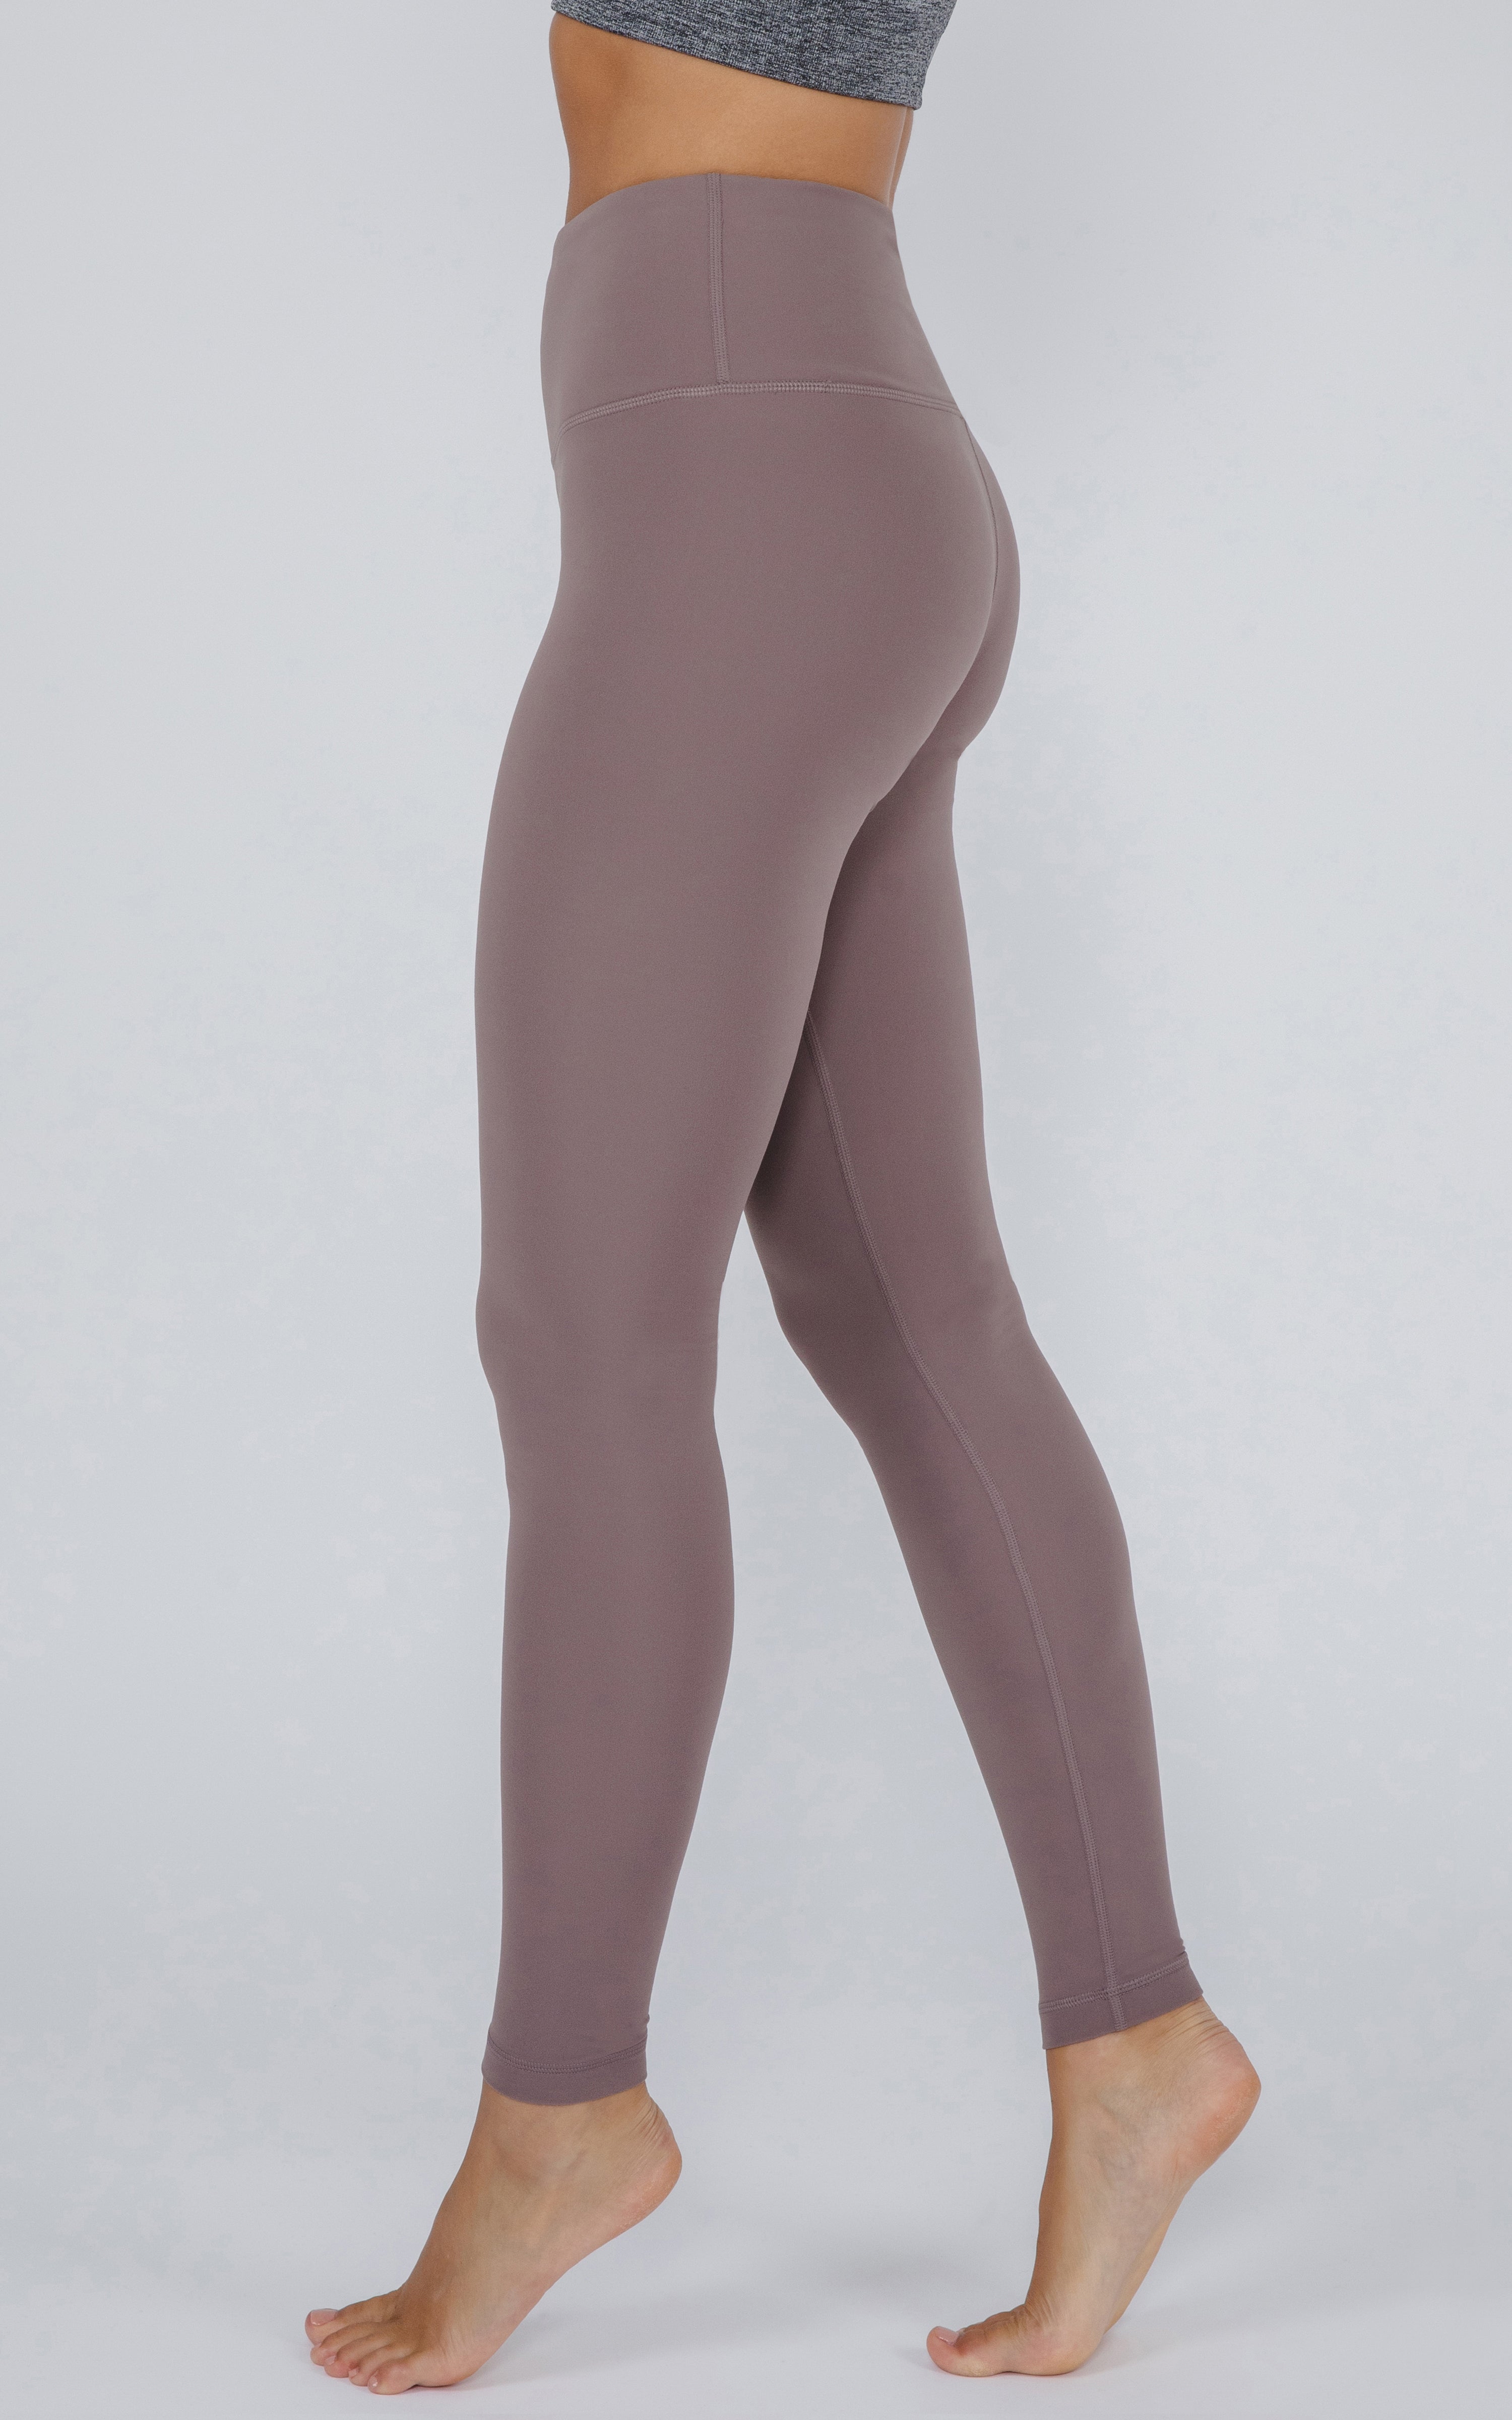 WINNYC Nude Tech Polygiene High Waist Full Length Legging